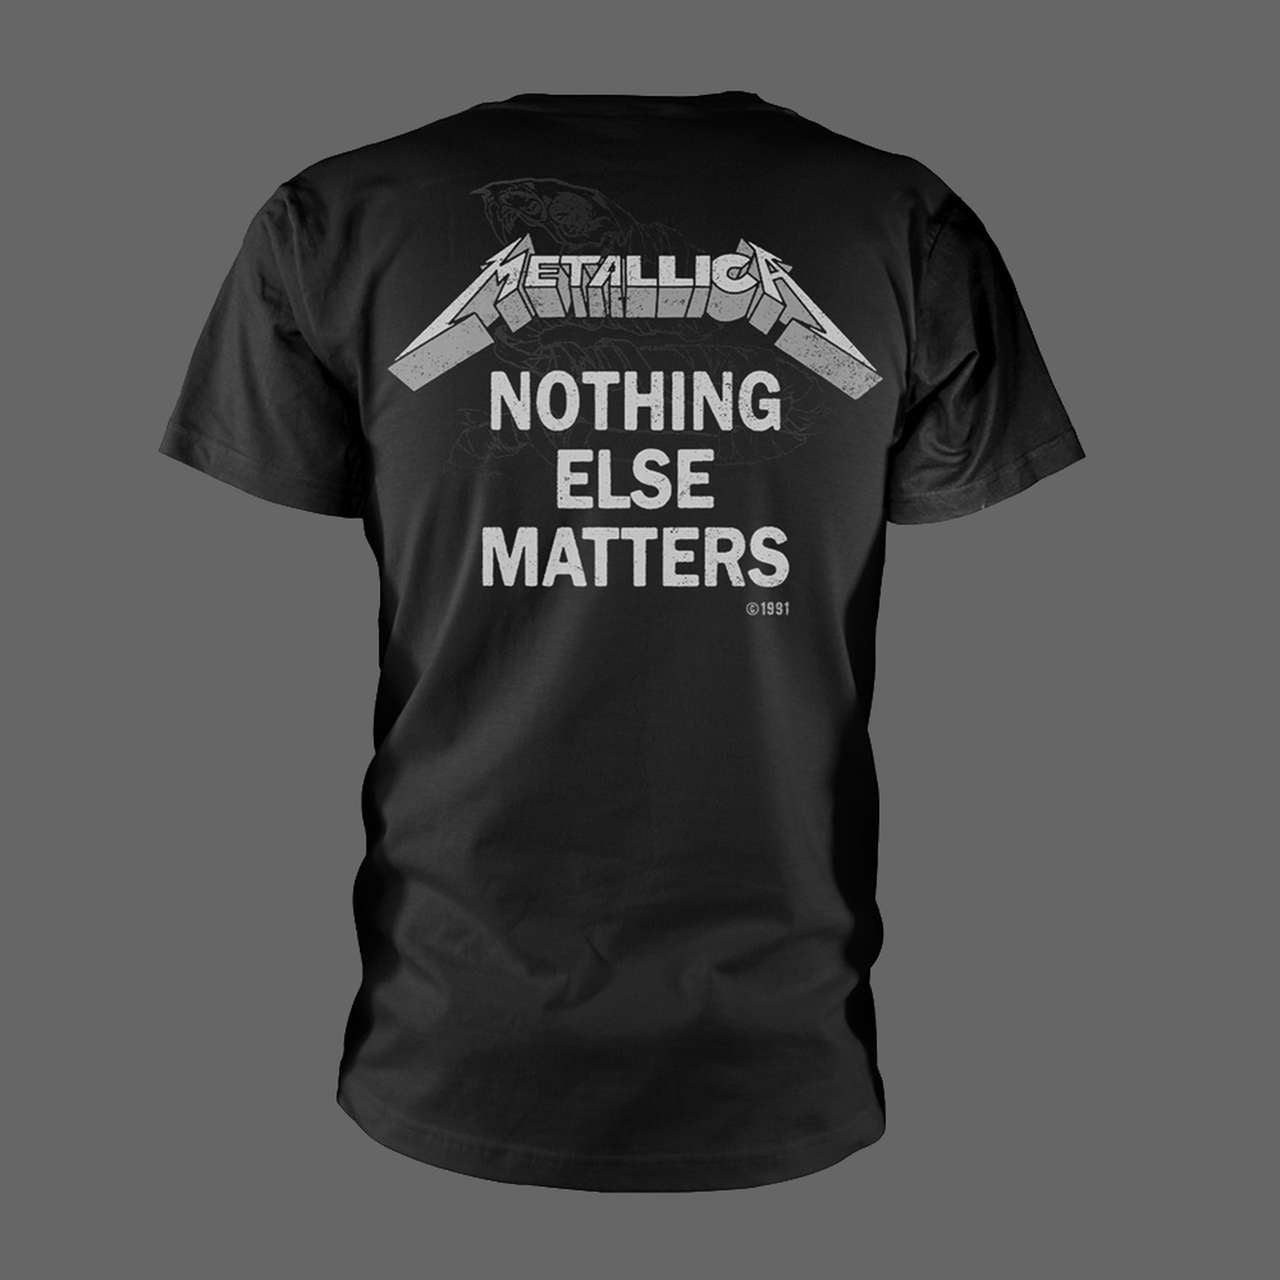 Metallica - Nothing Else Matters (T-Shirt)